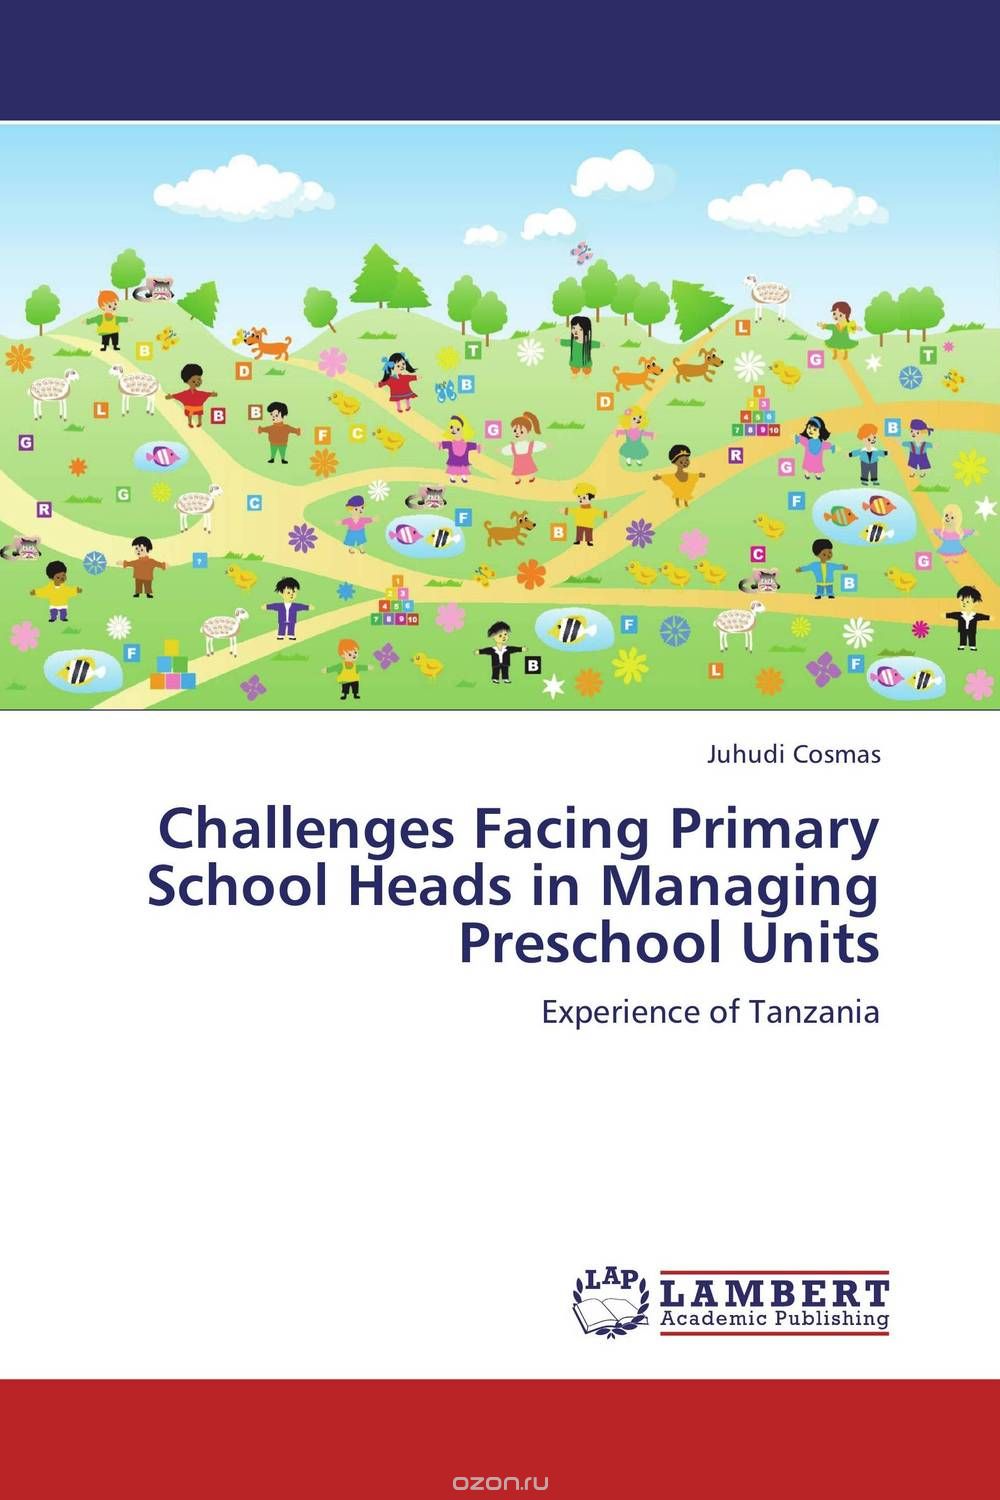 Скачать книгу "Challenges Facing Primary School Heads in Managing Preschool Units"